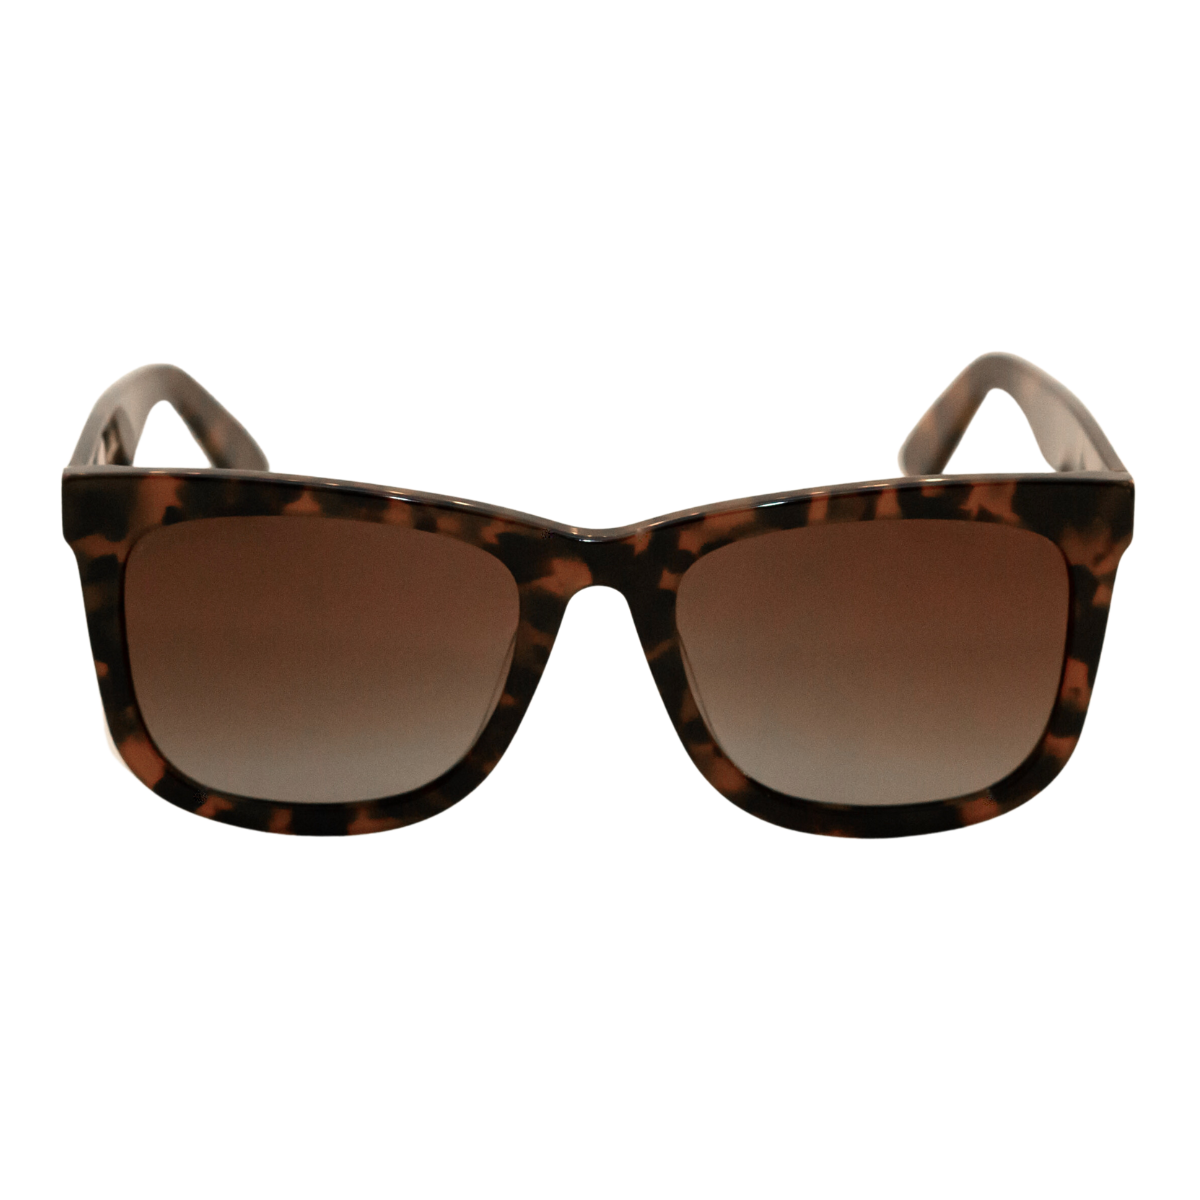 sunglasses, wayfarer silhouette, tort frame, smokey brown lens, wide face sunglasses